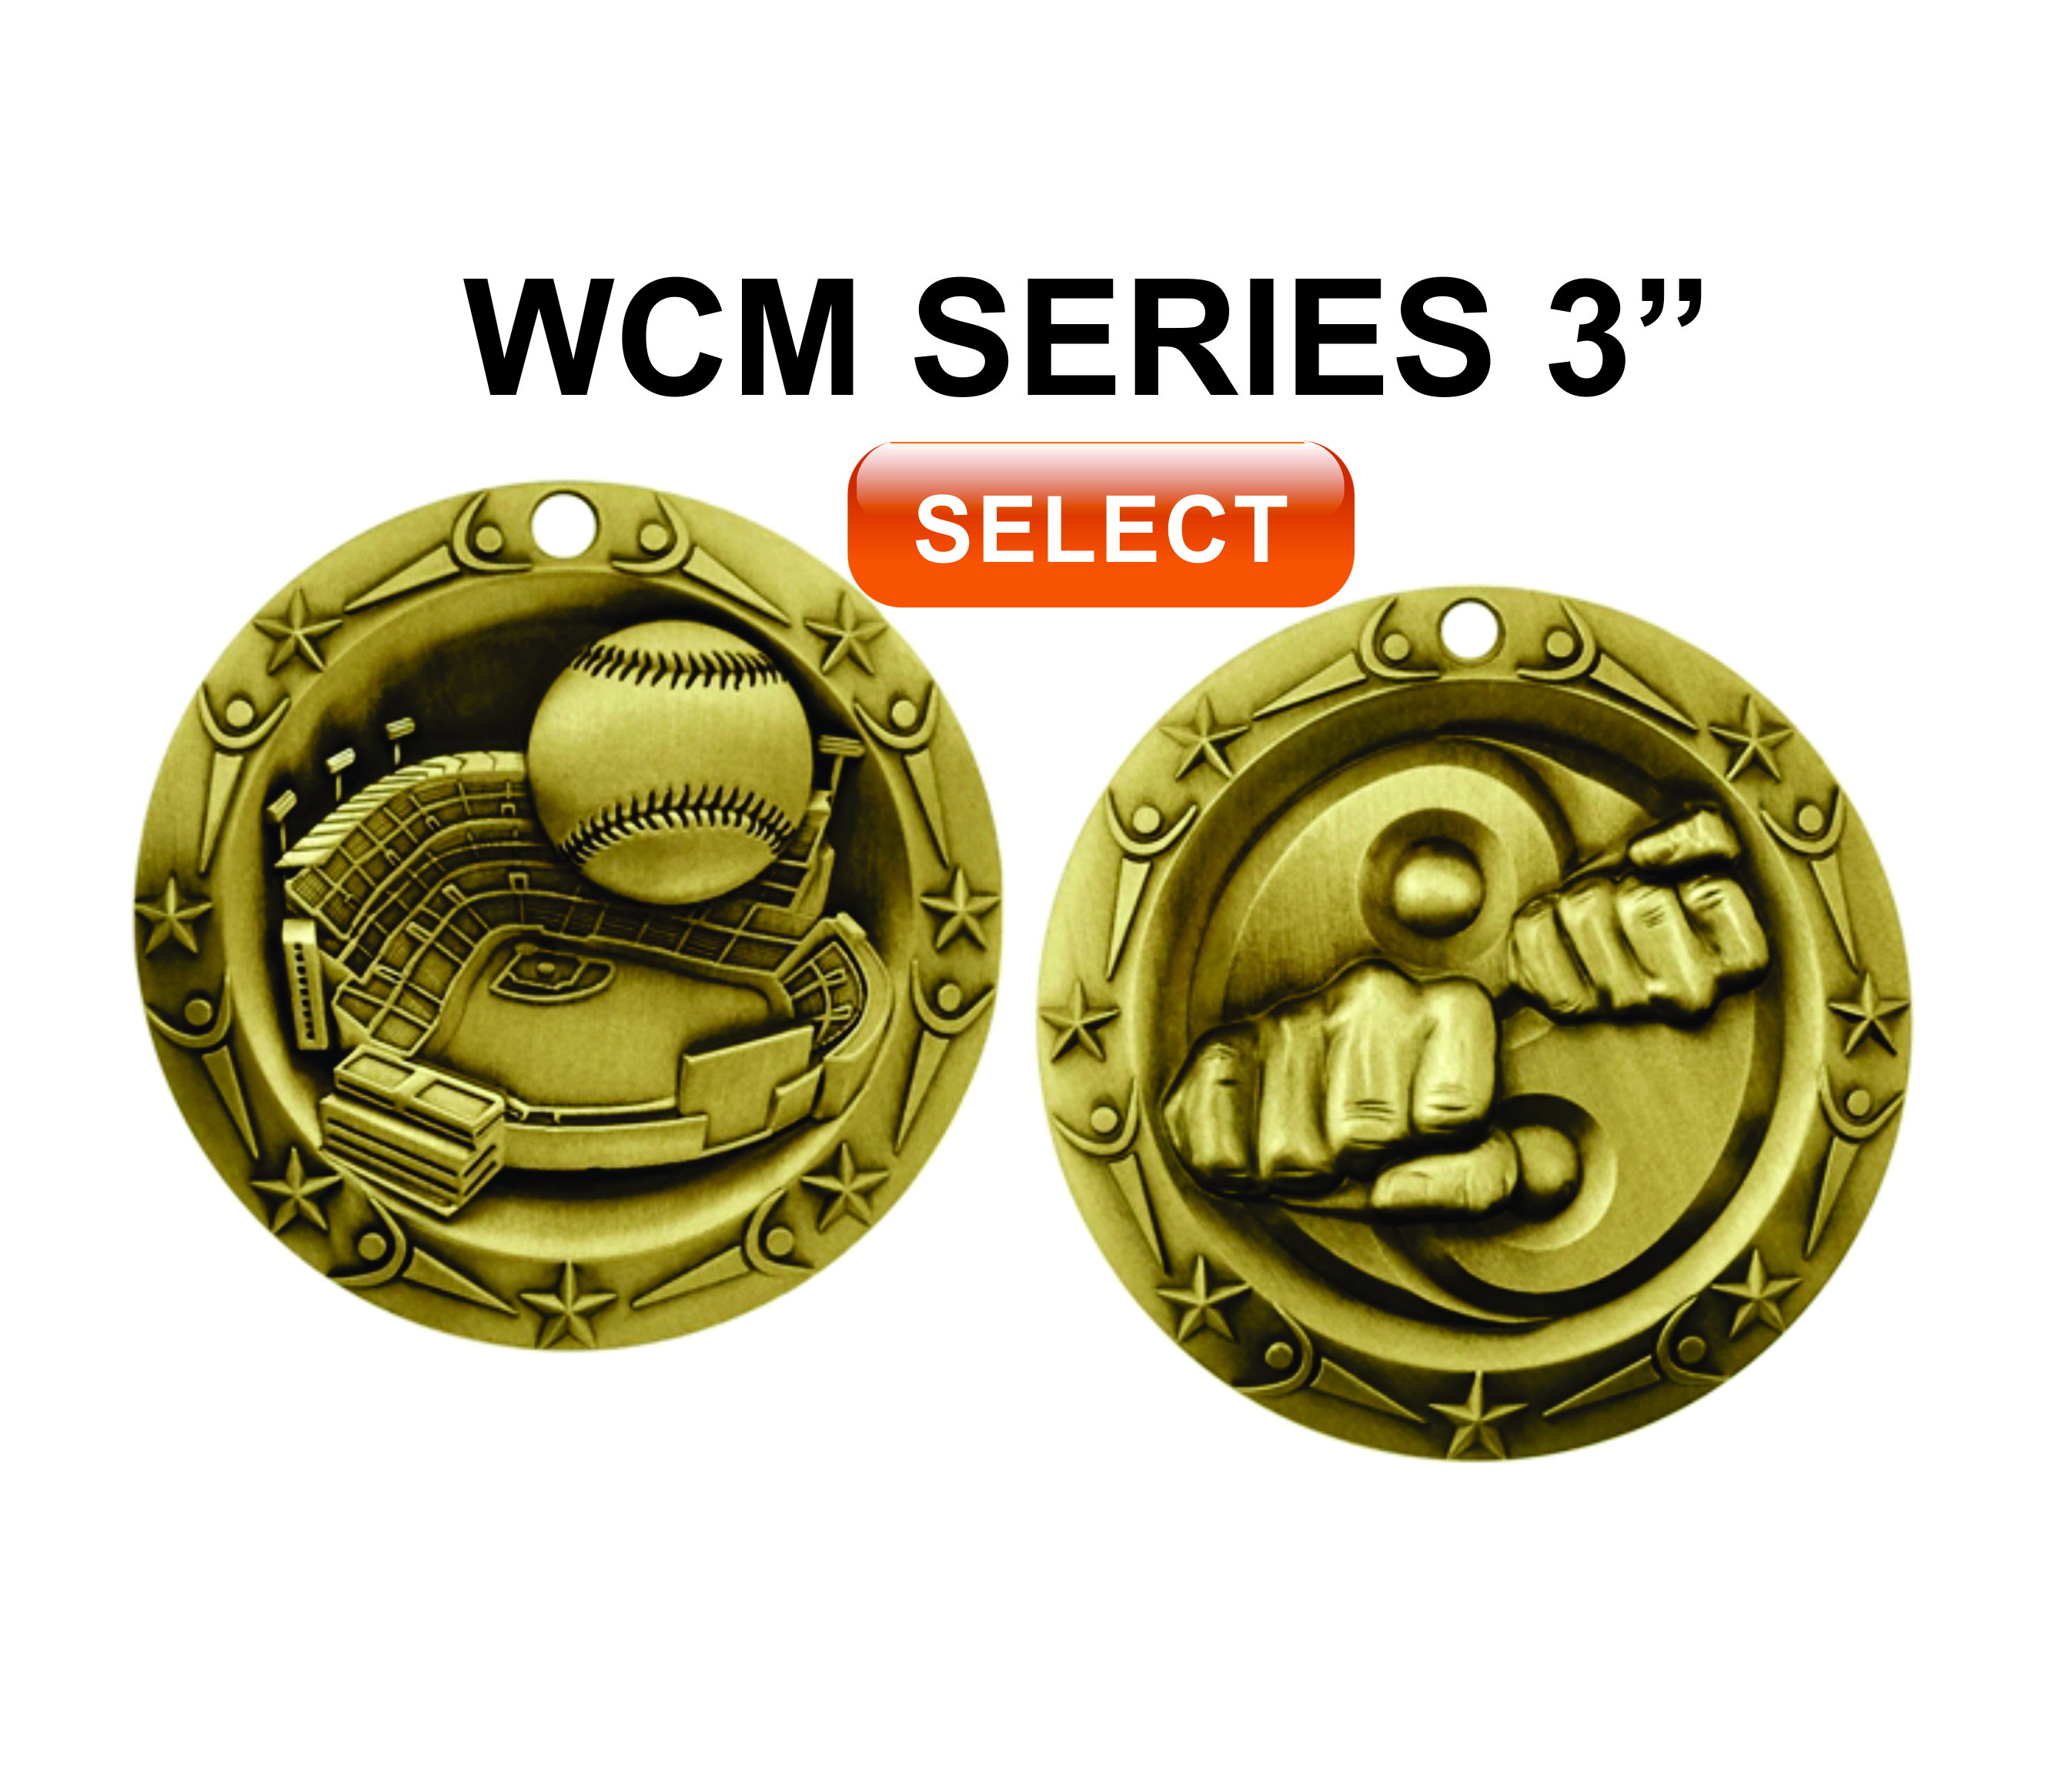 wm series award medals